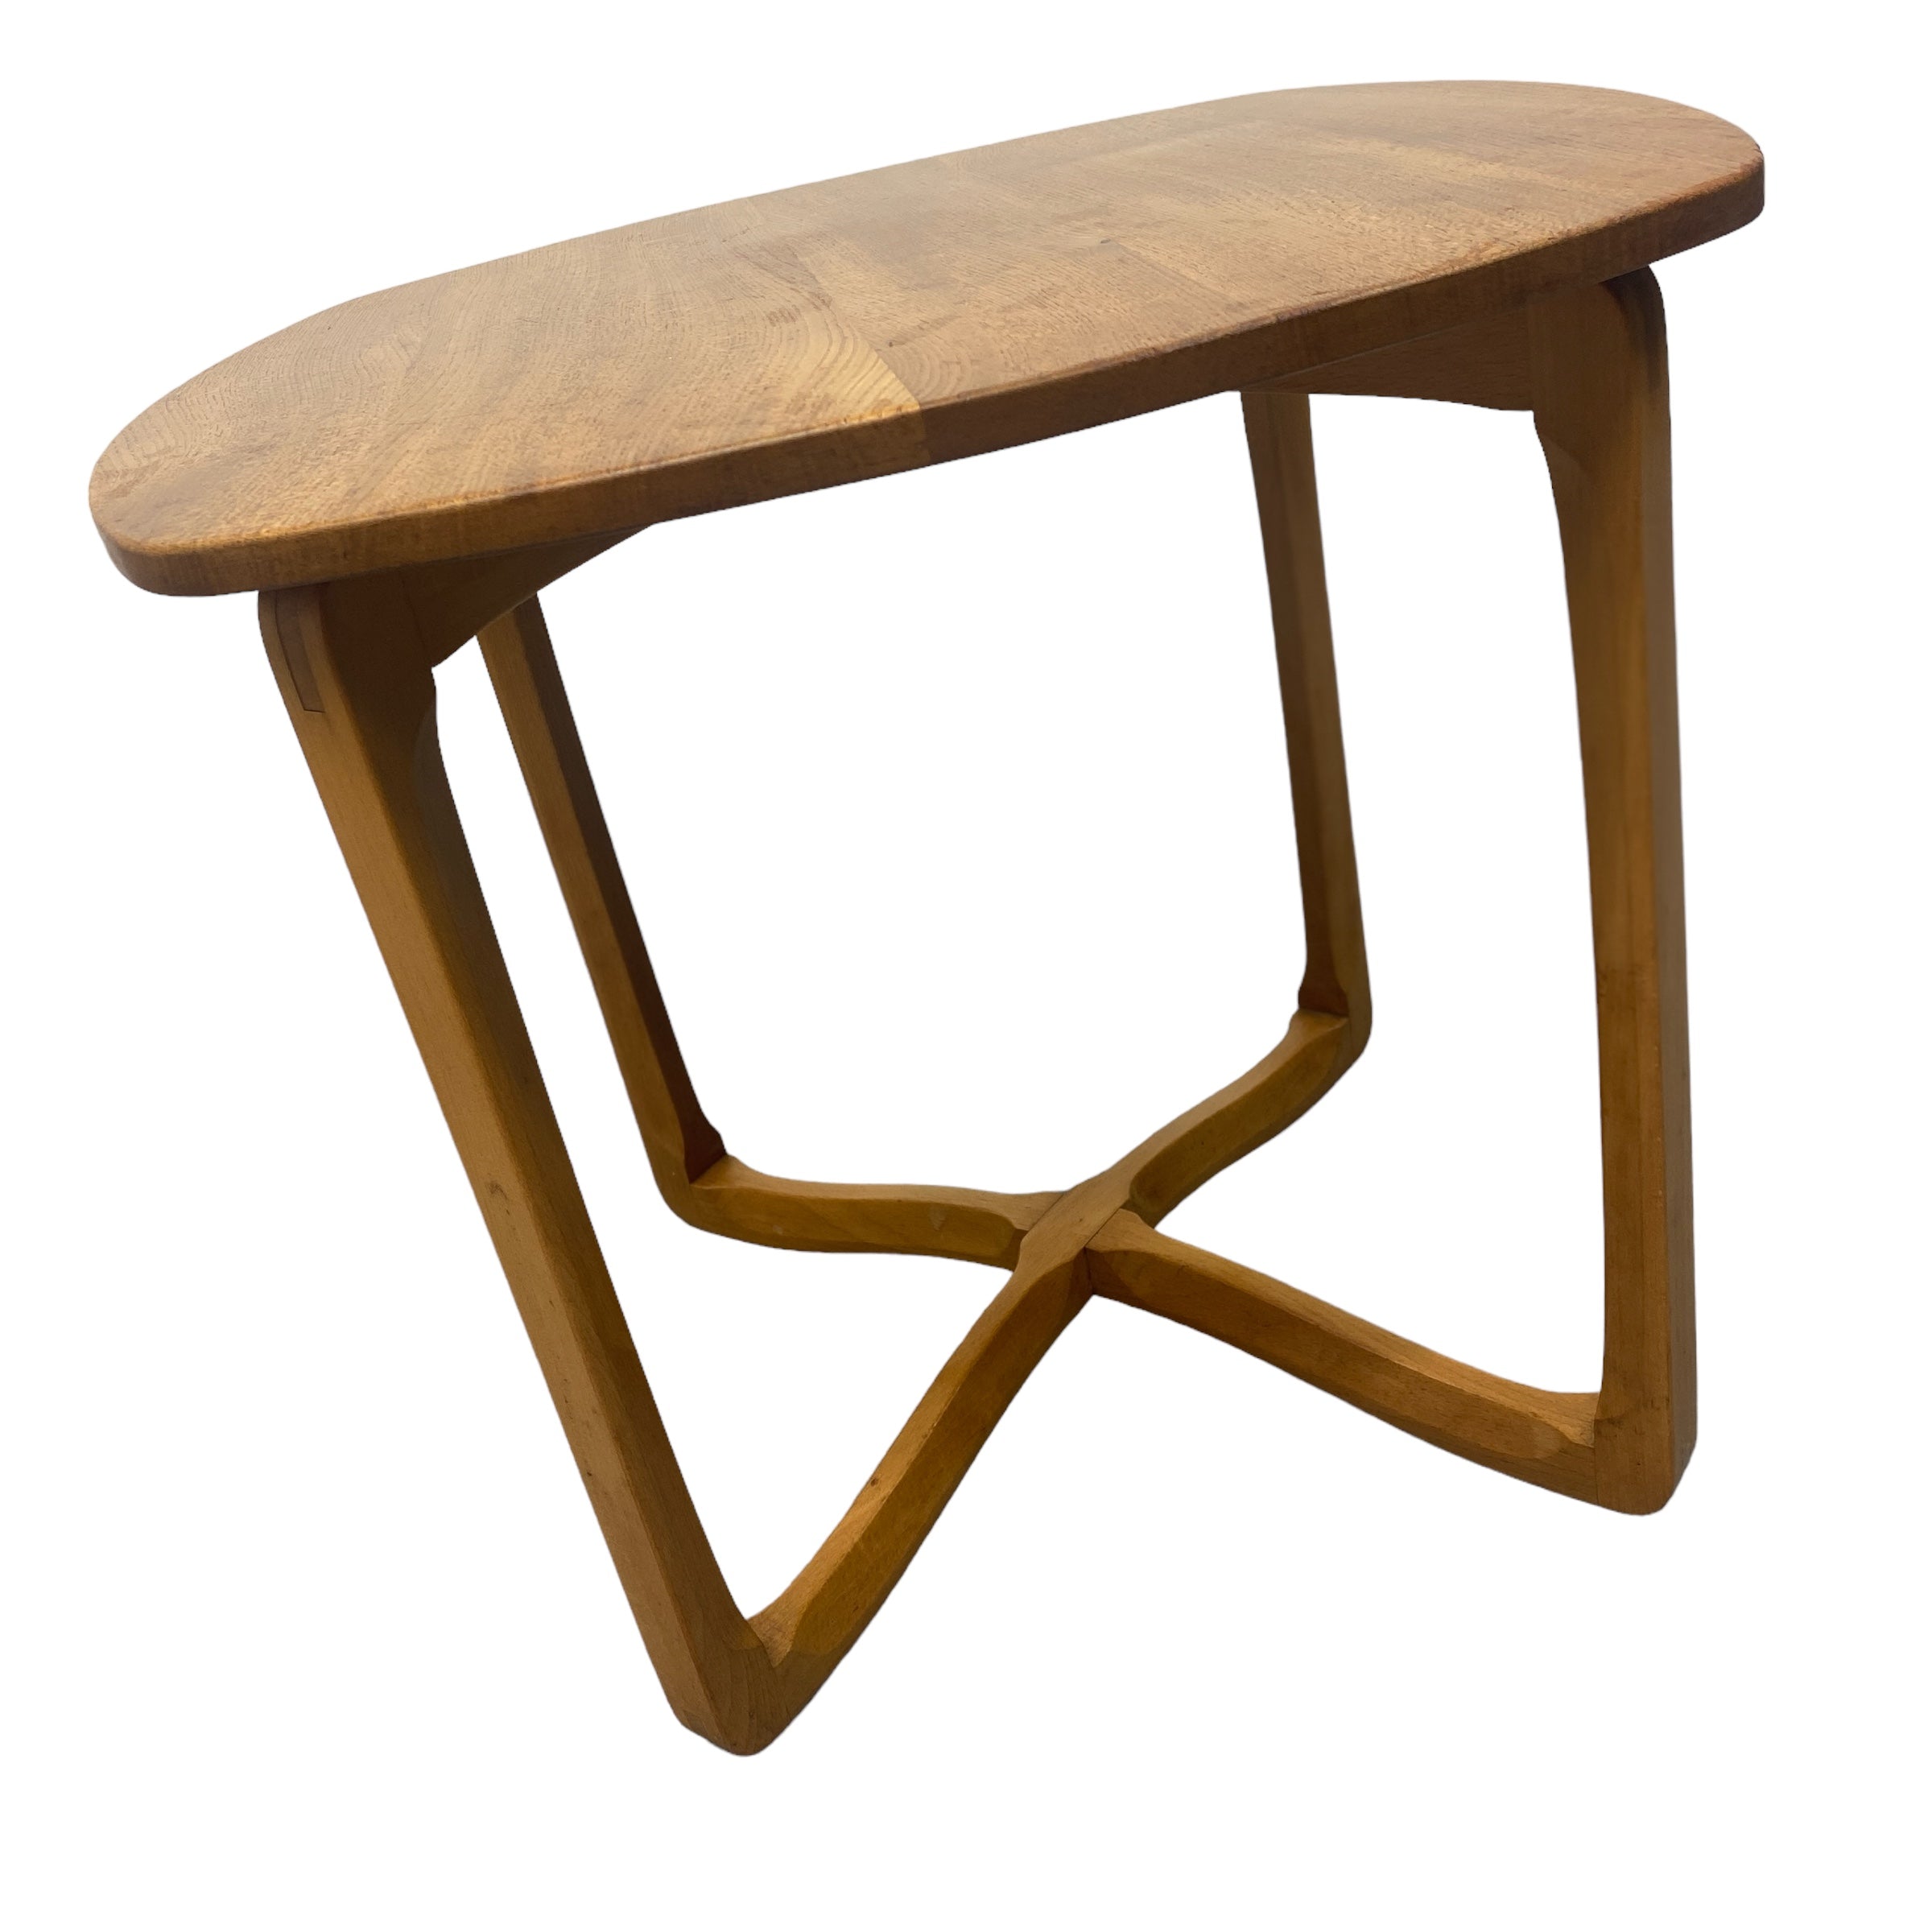 Model 516” square Elm Ercol Table